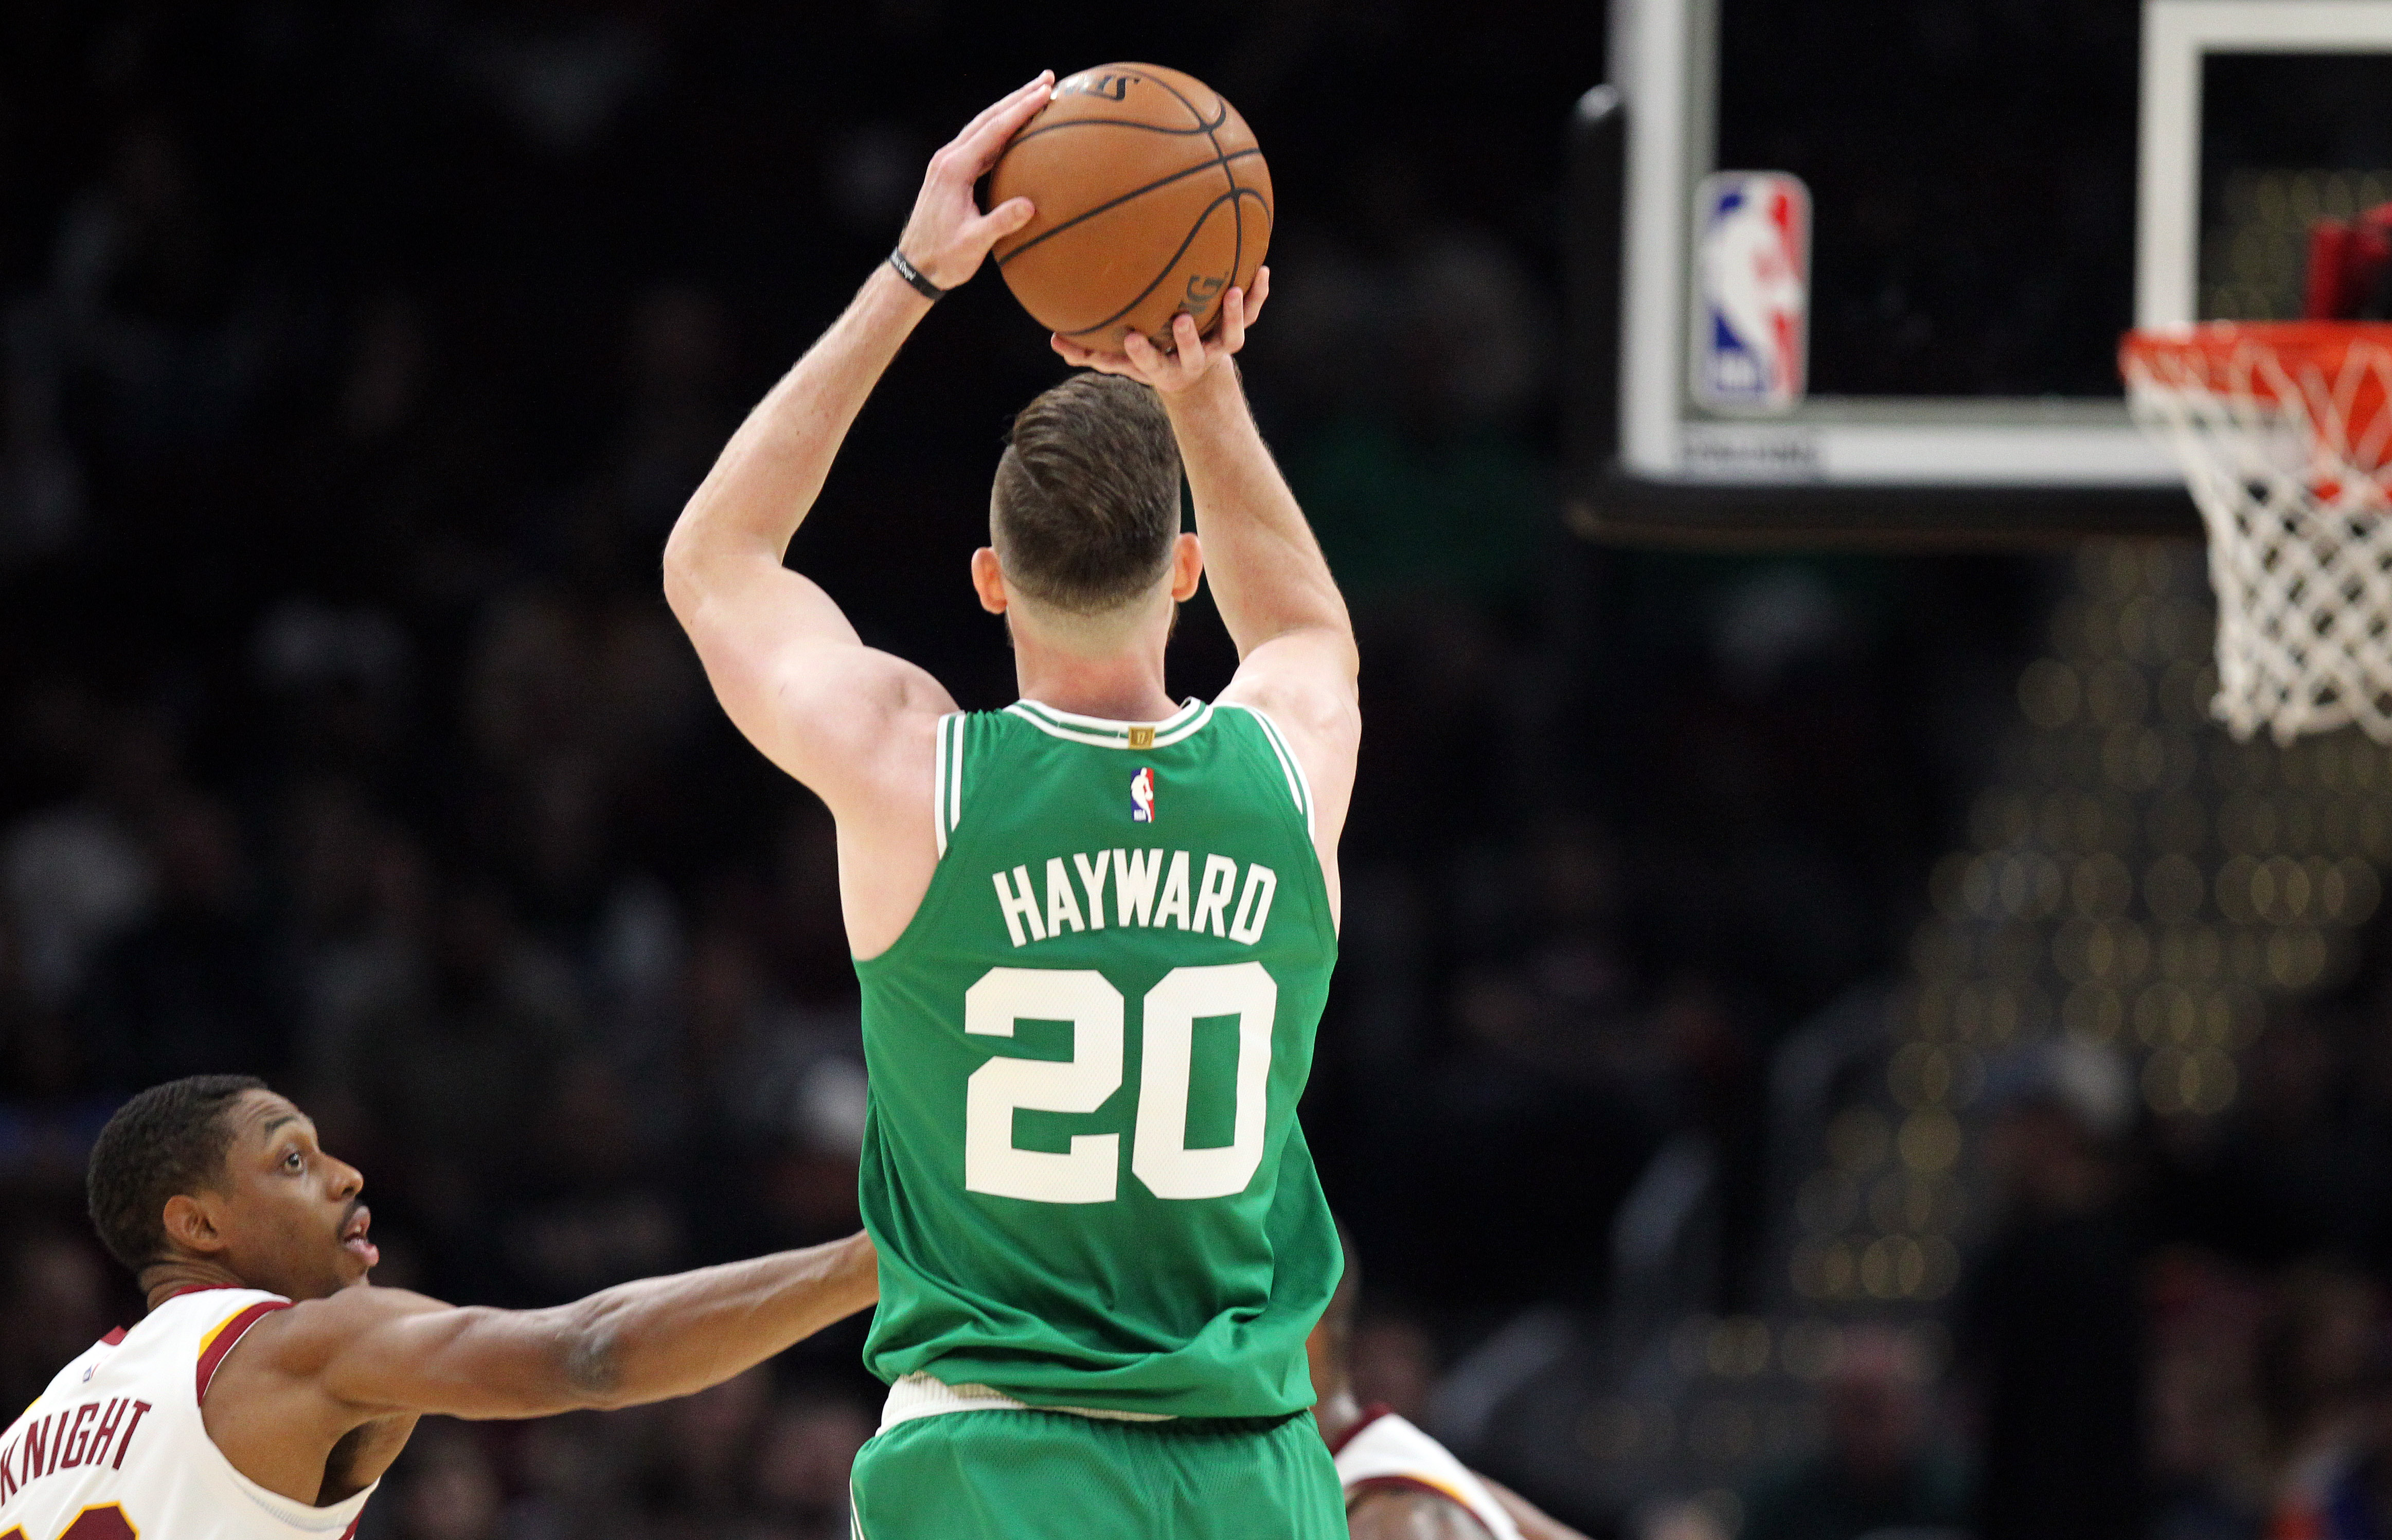 Worst part of sports': DFW athletes react as Celtics' Gordon